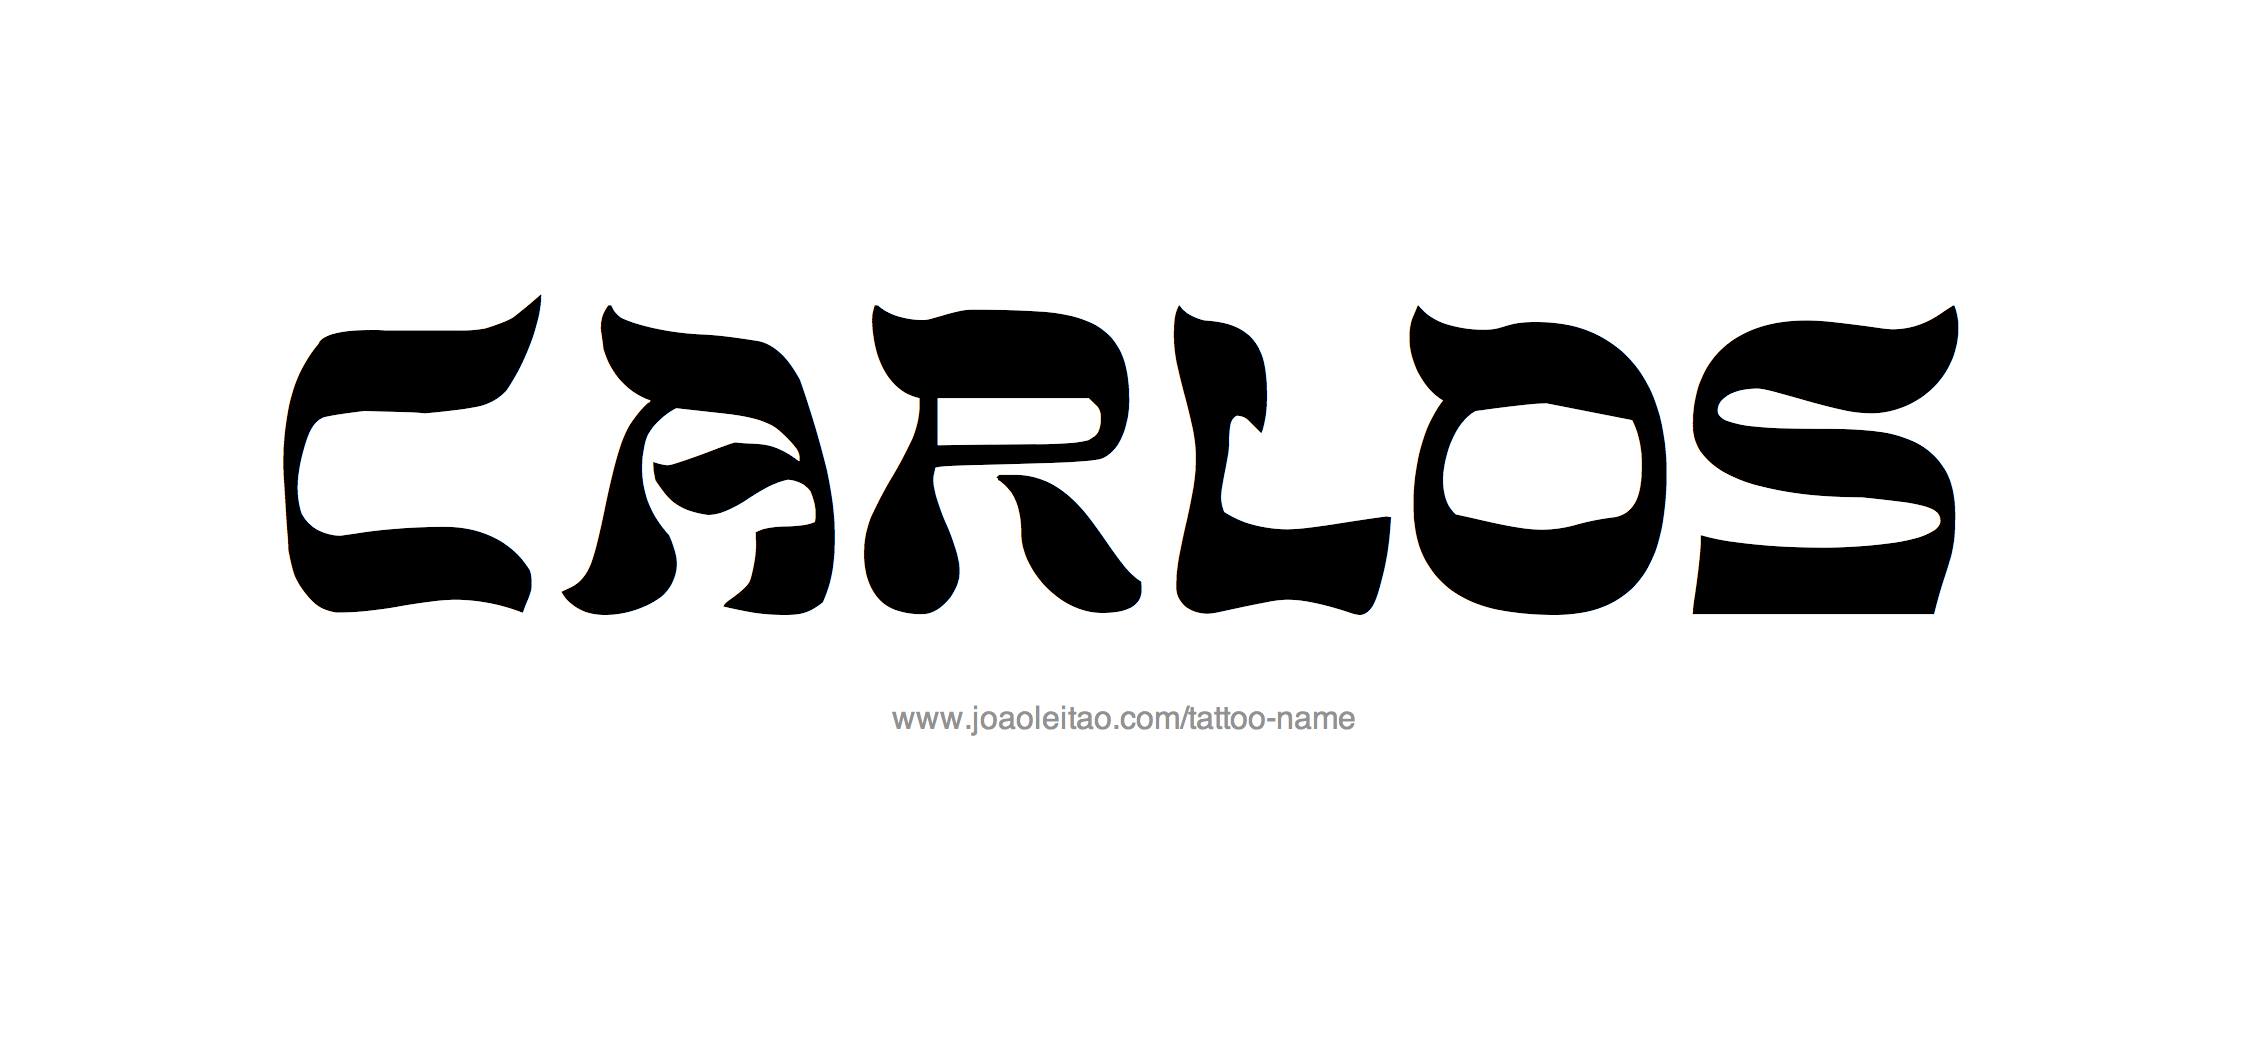 Tattoo Design Name Carlos